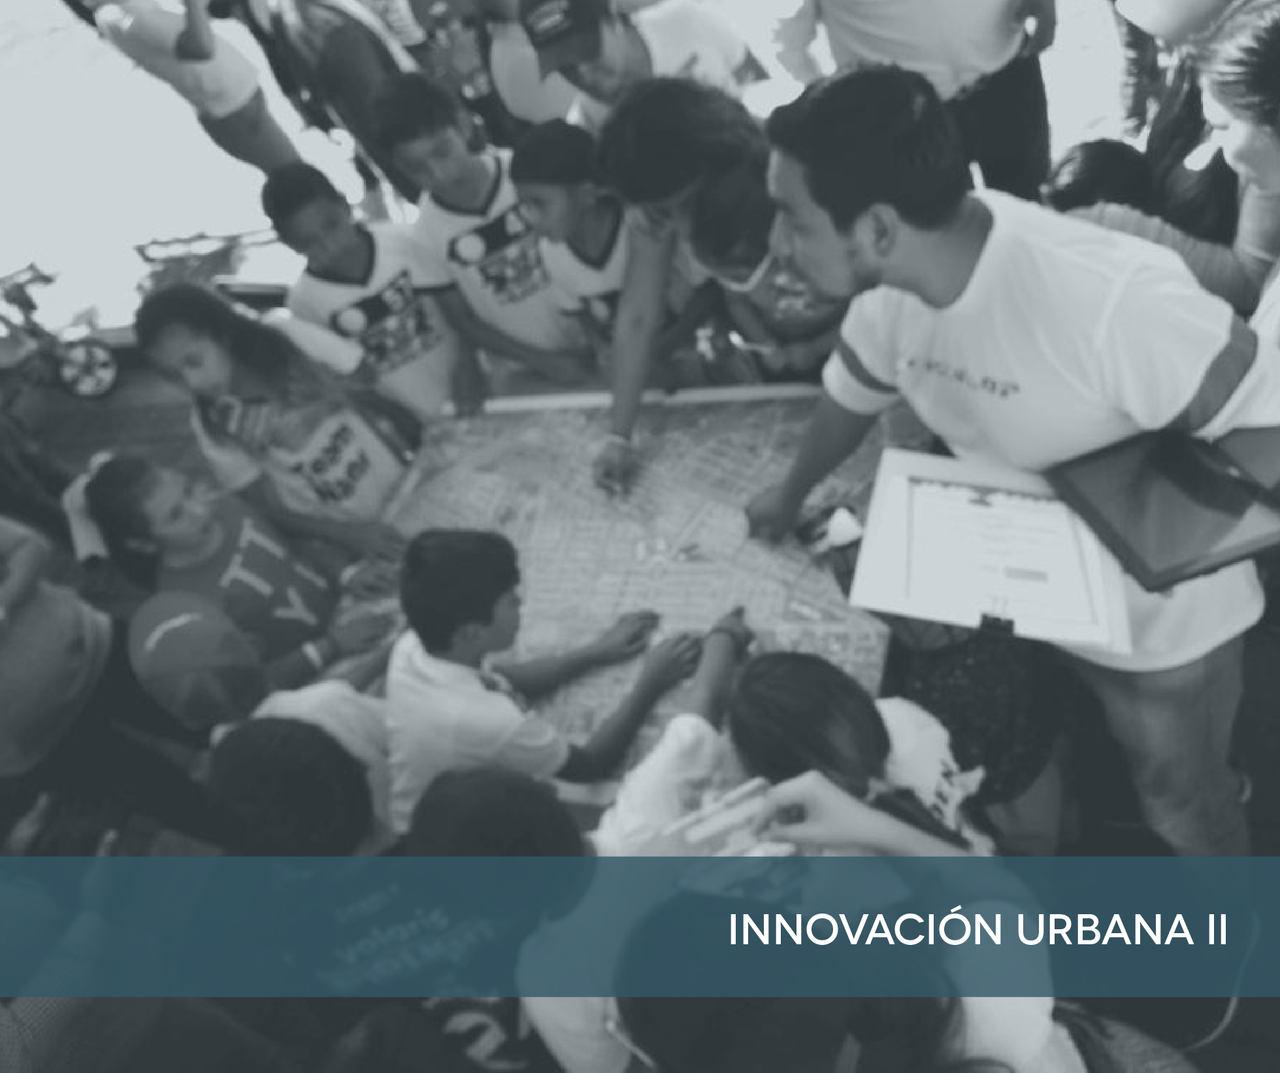 Cover Image for Glosario de términos de innovación urbana | Parte II